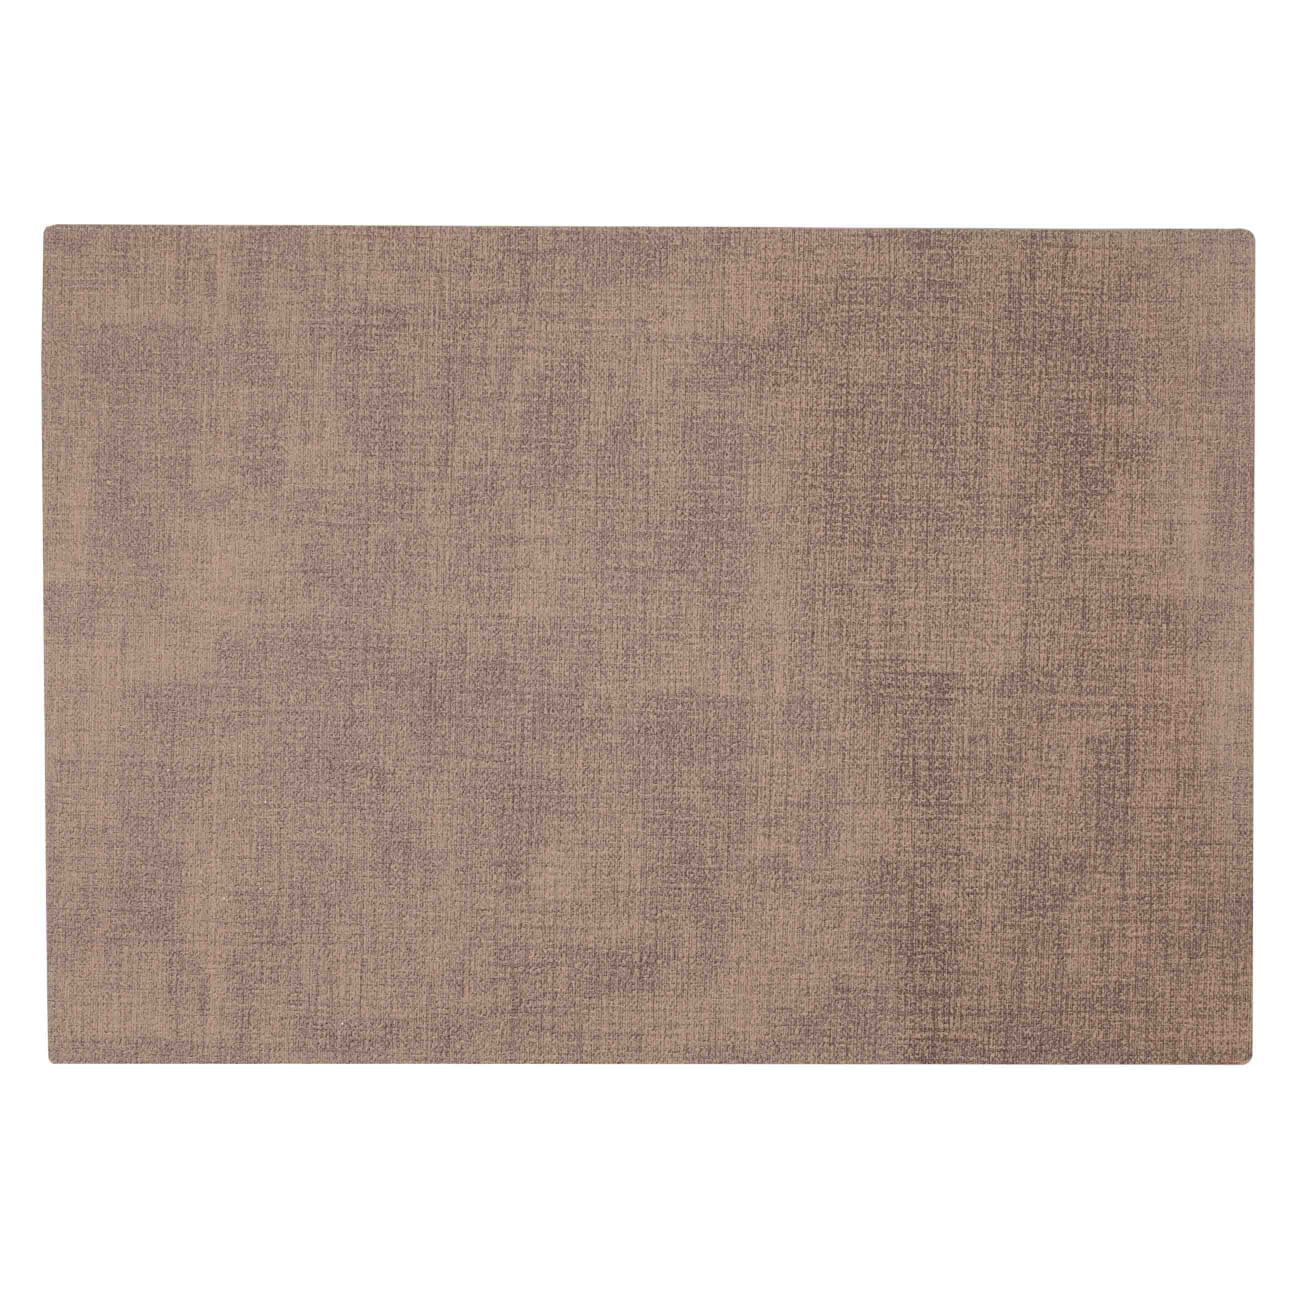 Napkin for appliances, 30x43 cm, polyurethane, rectangular, brown, Rock изображение № 1